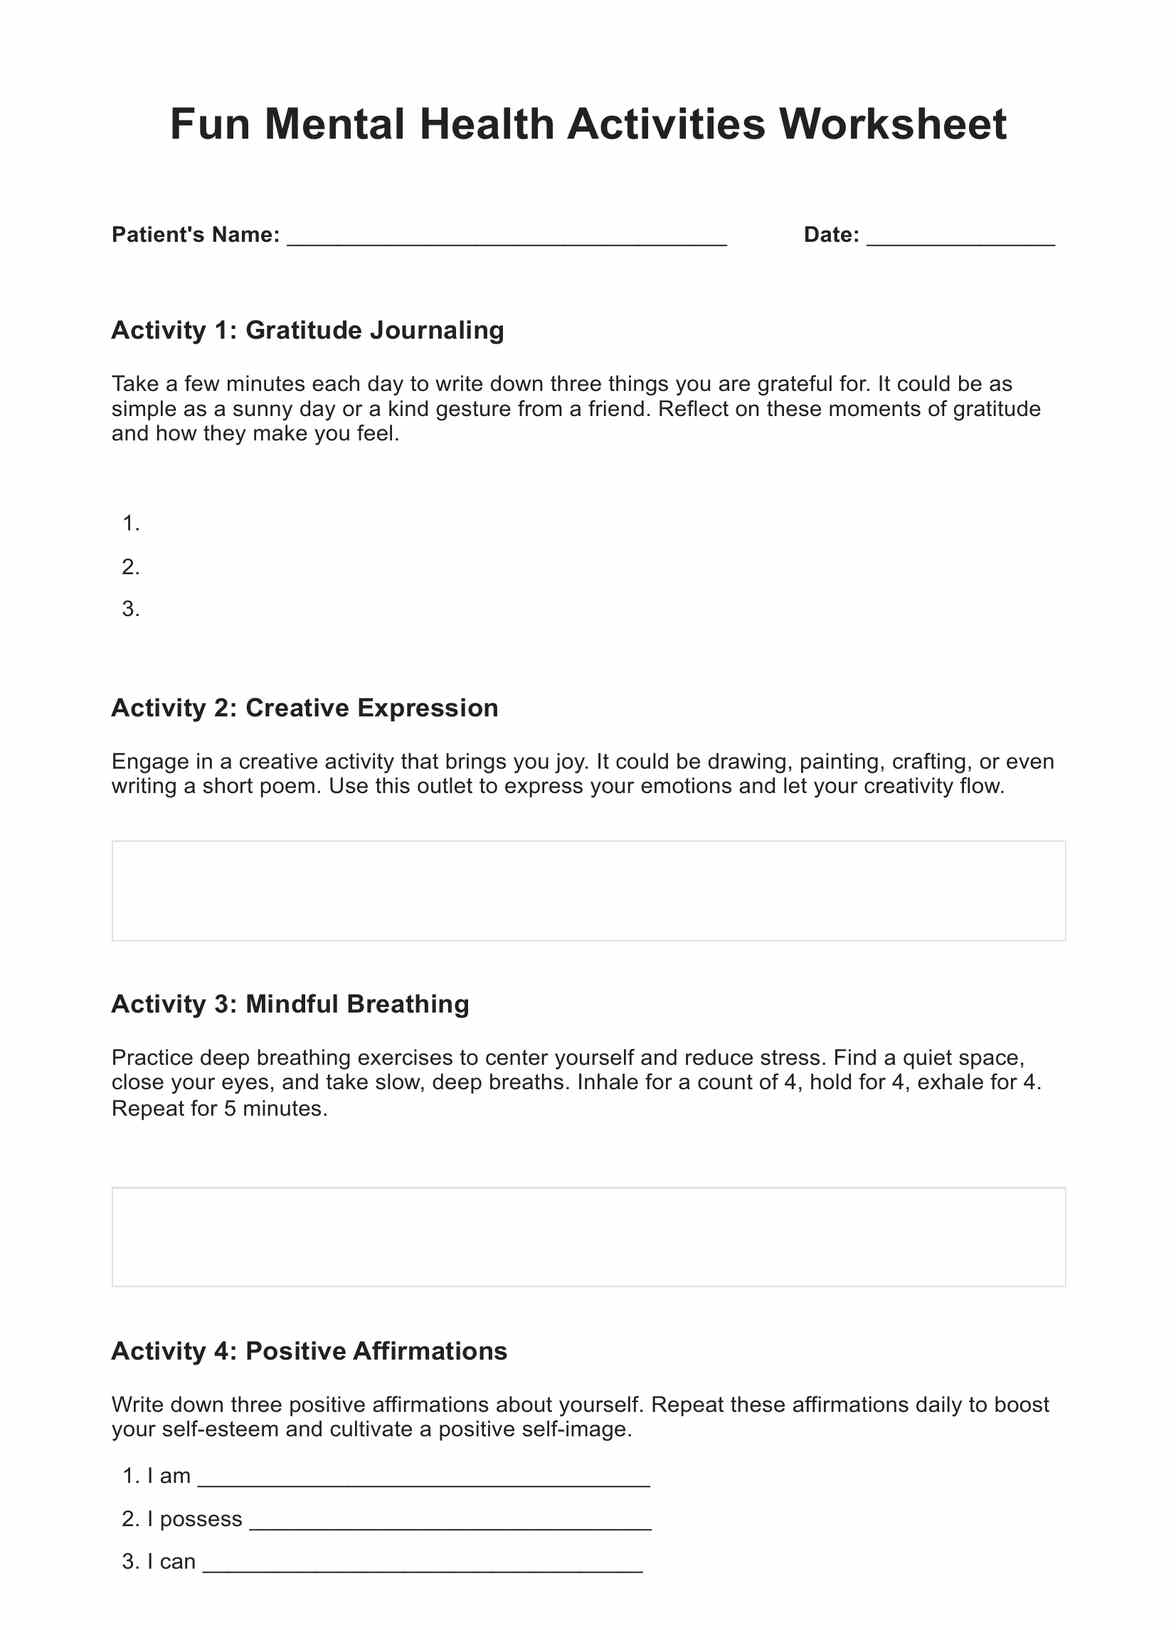 Fun Mental Health Activities Worksheet PDF Example